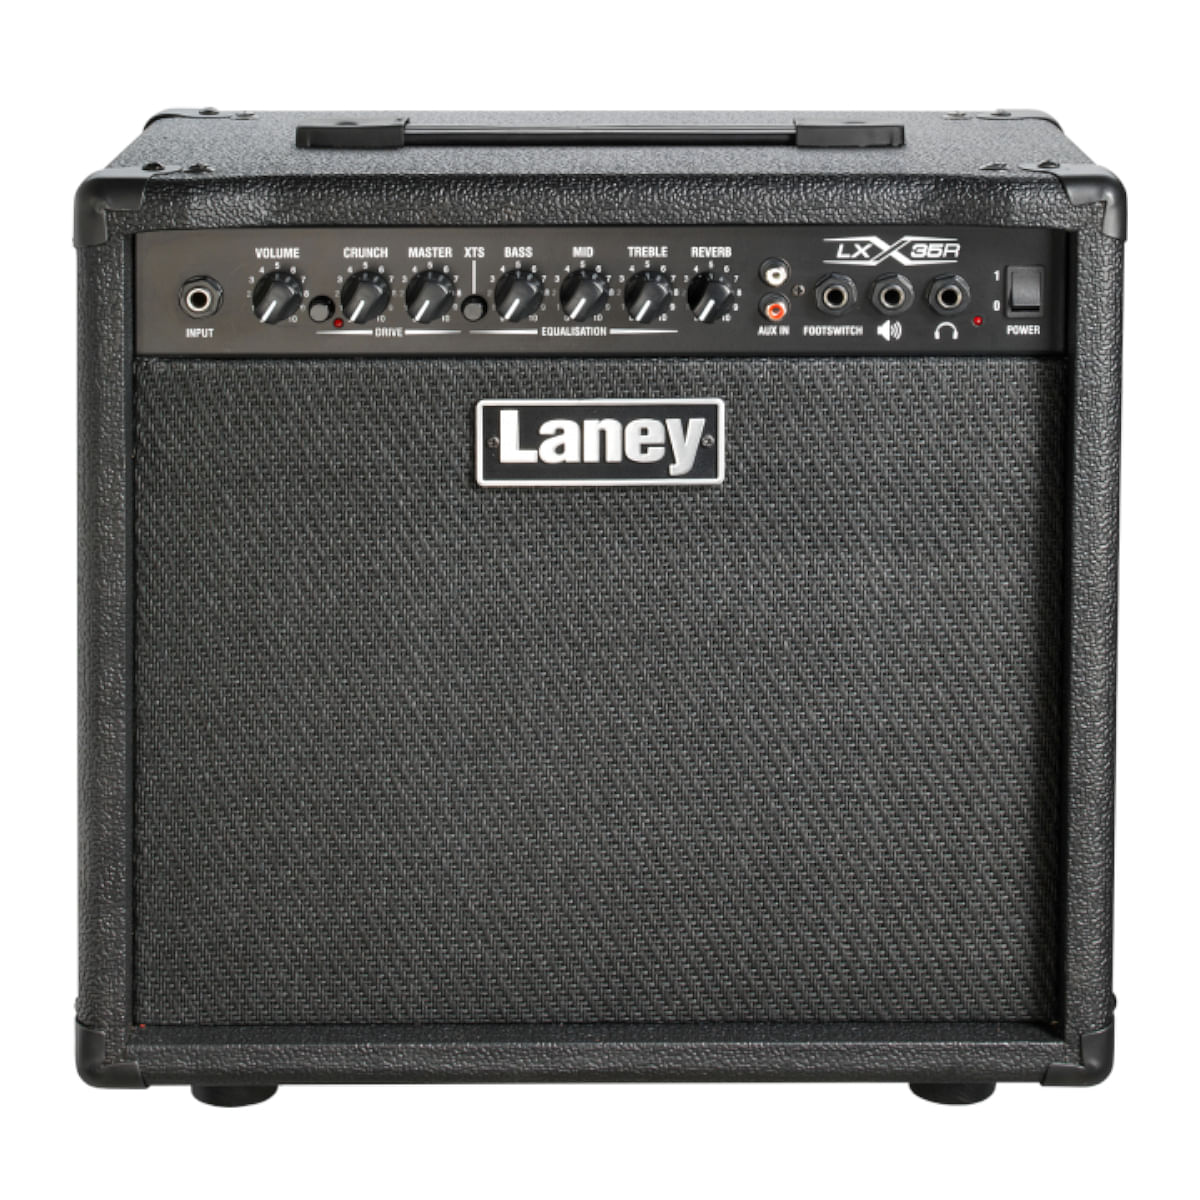 Laney, Guitar Amp, LX35R, 35W